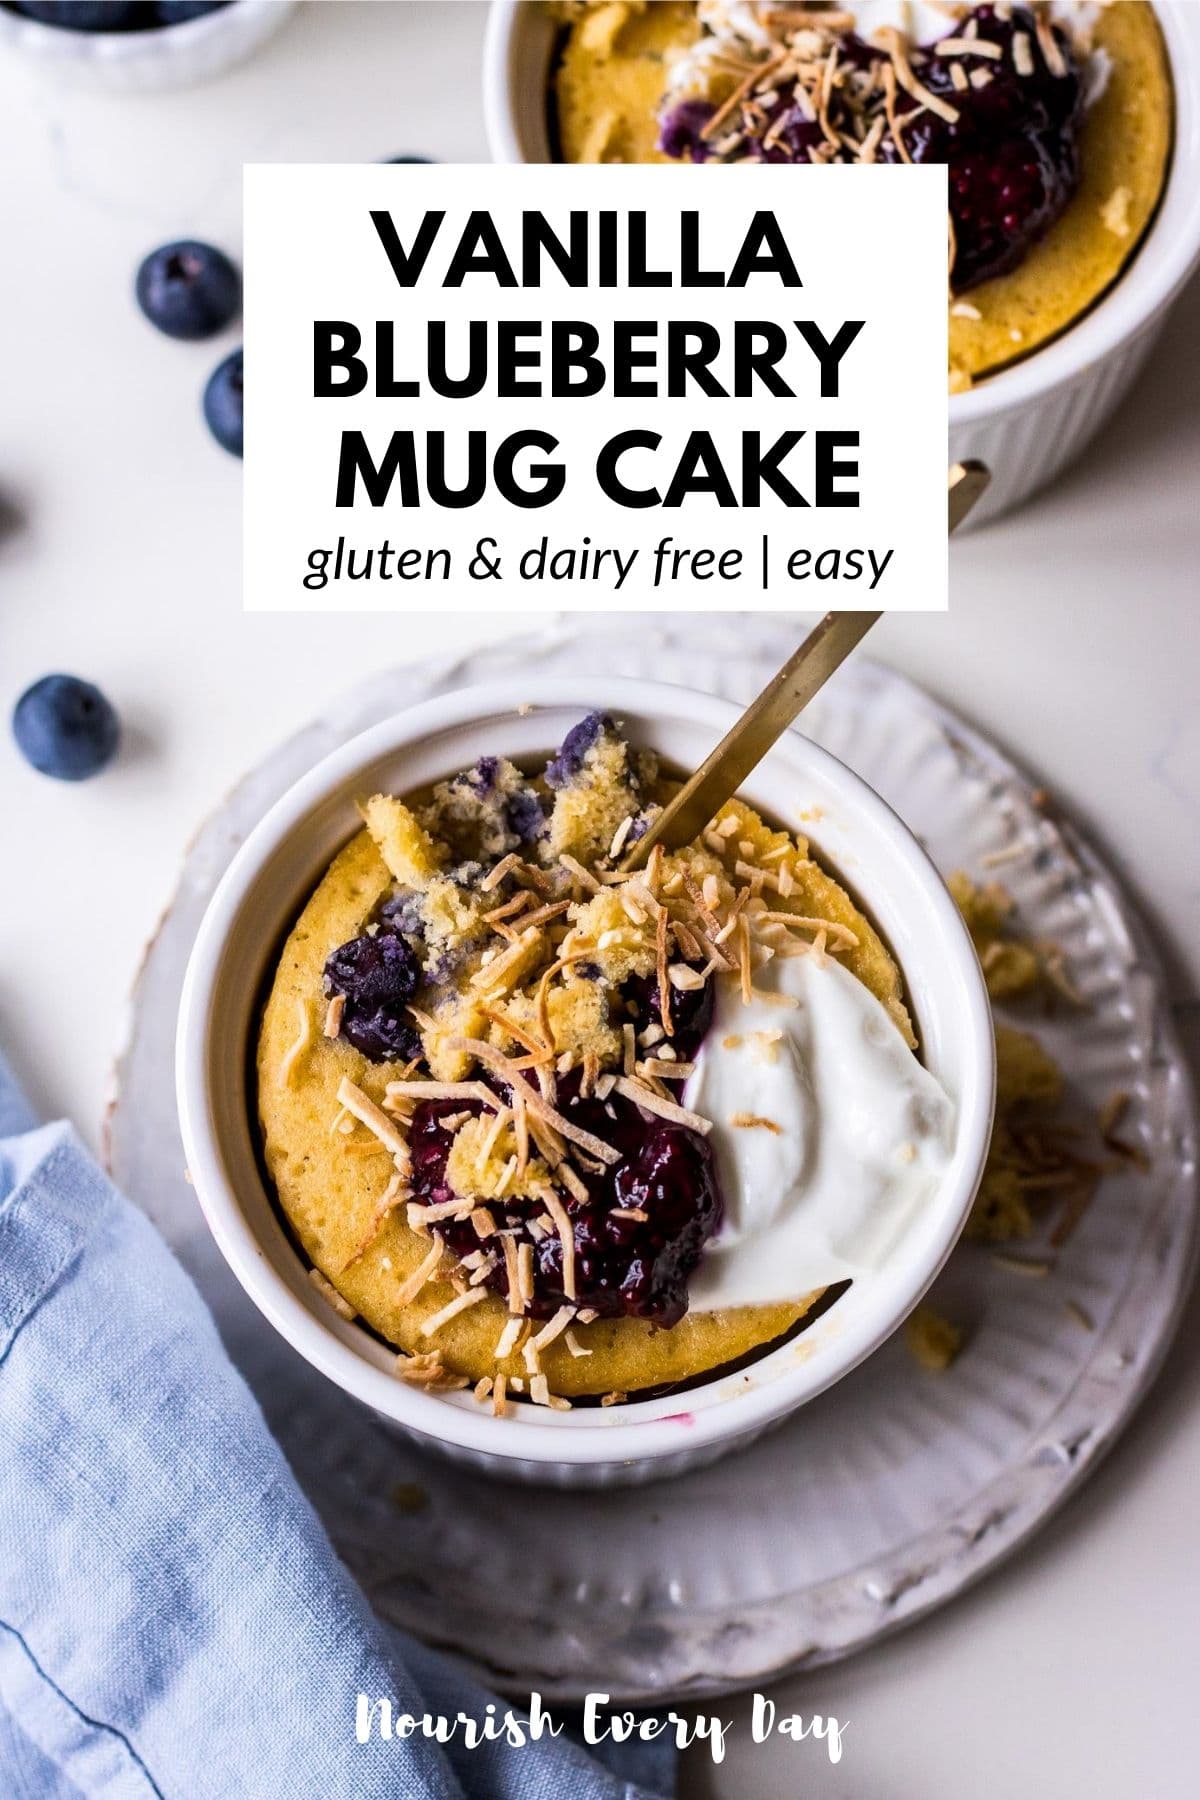 Vanilla Blueberry Mug Cake Recipe Image Pin